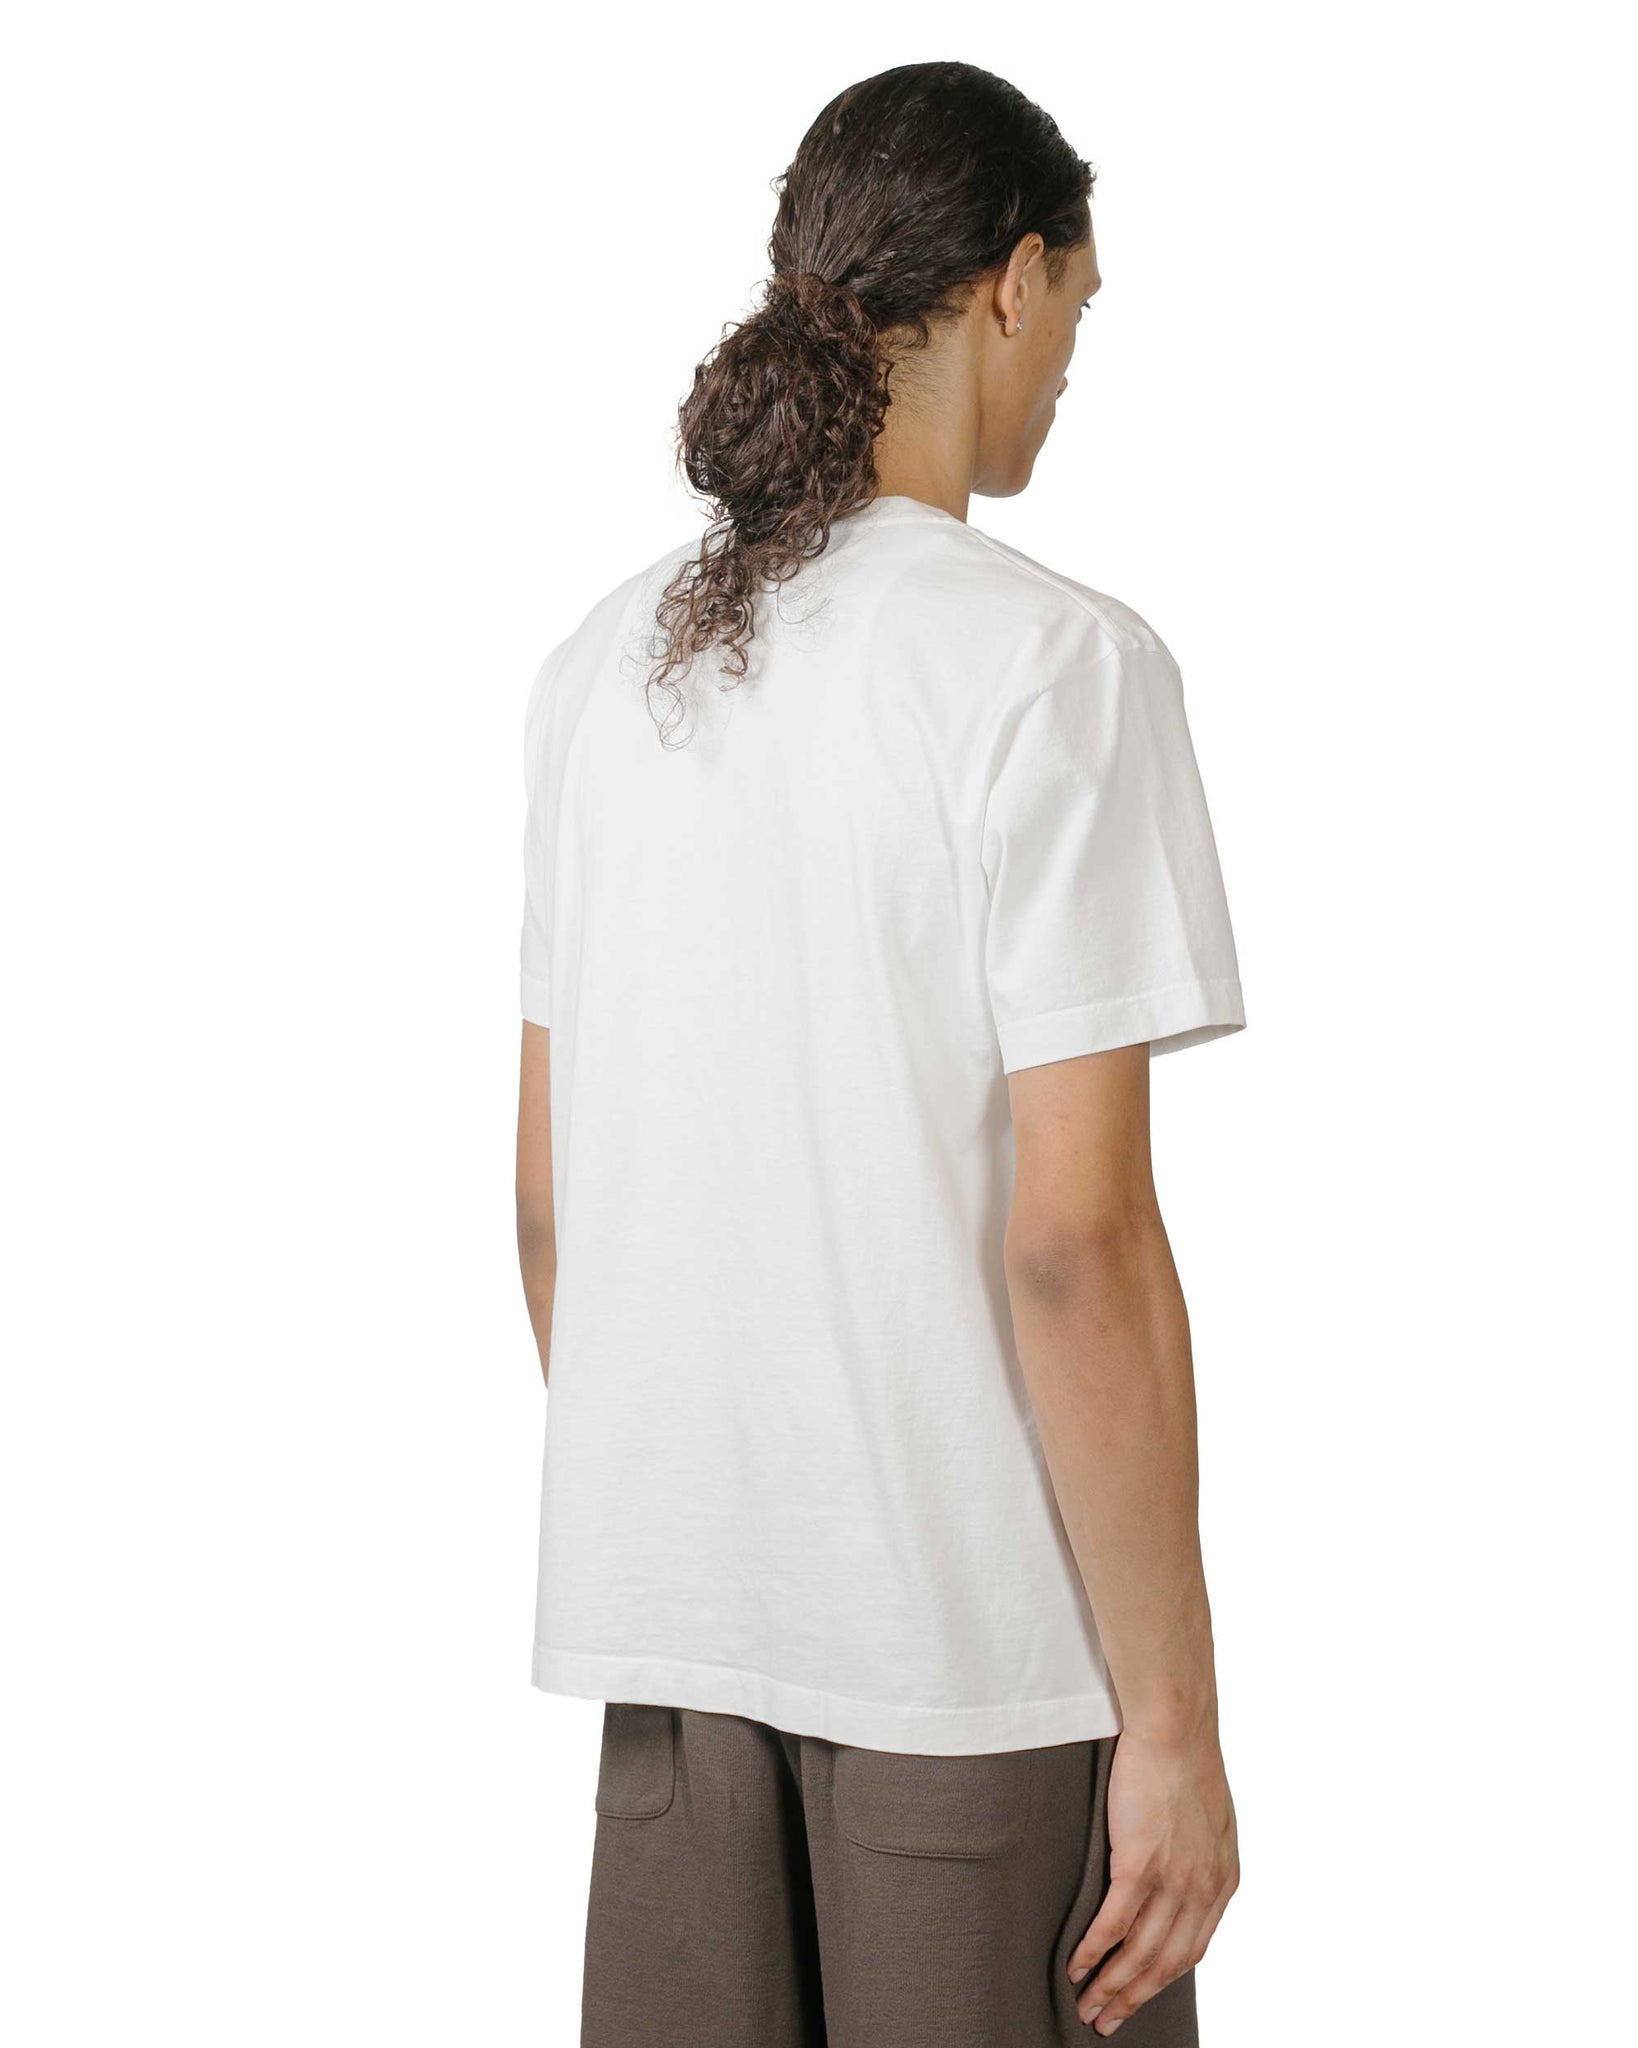 Lady White Co. Municipal T-Shirt White model back